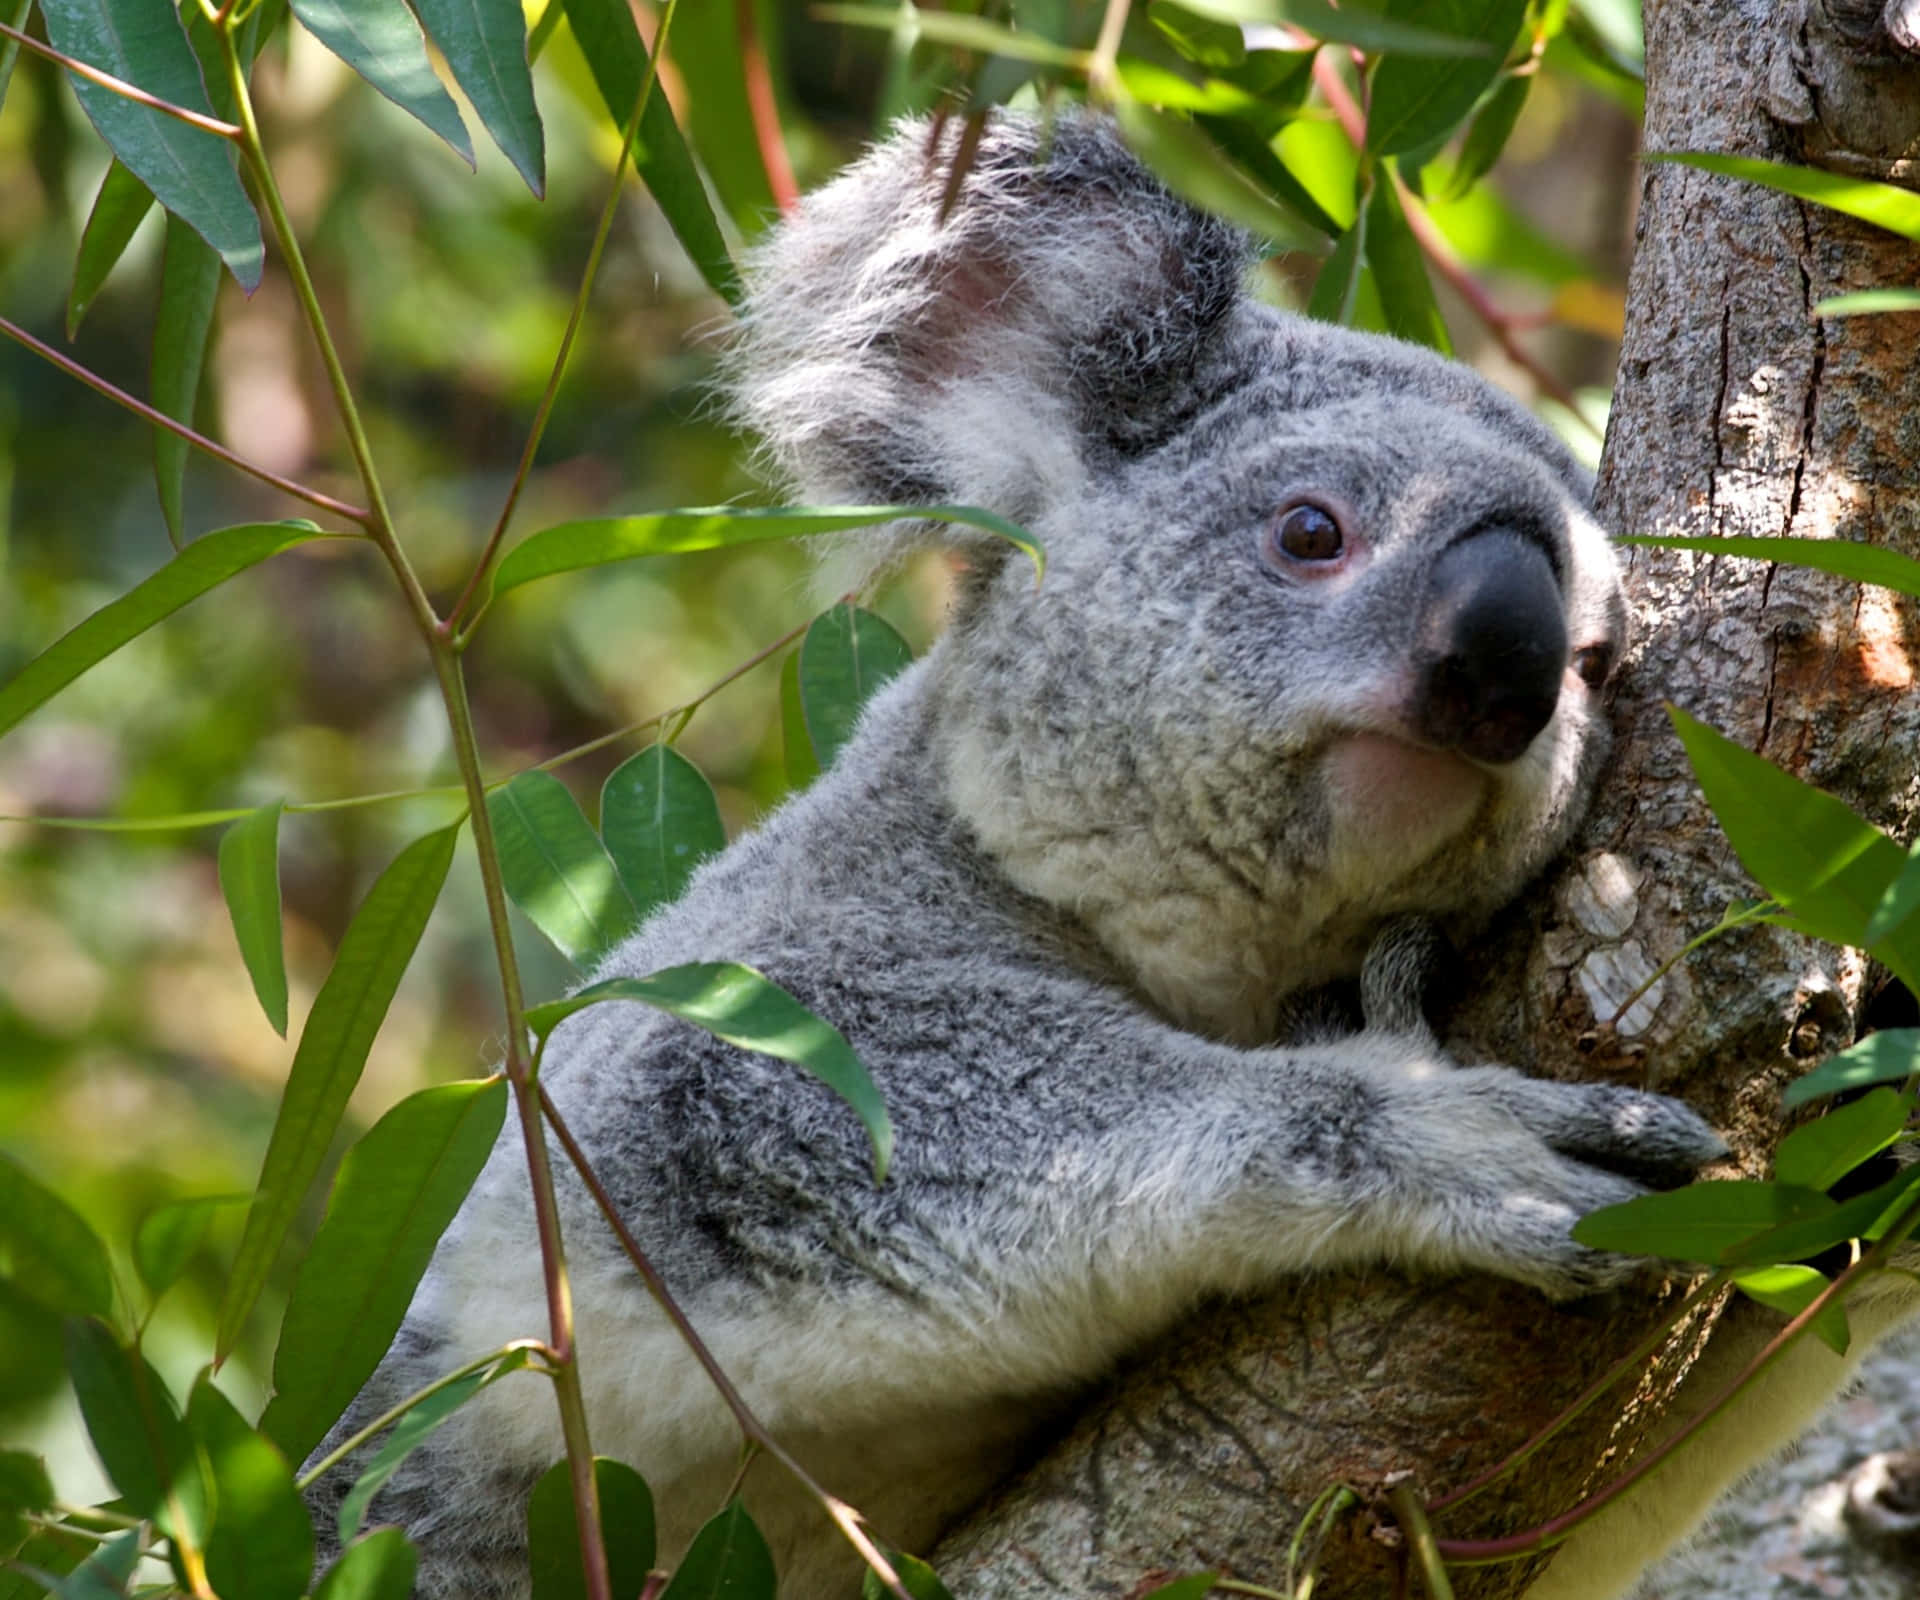 A cute koala bear peers out from atop a eucalyptus tree